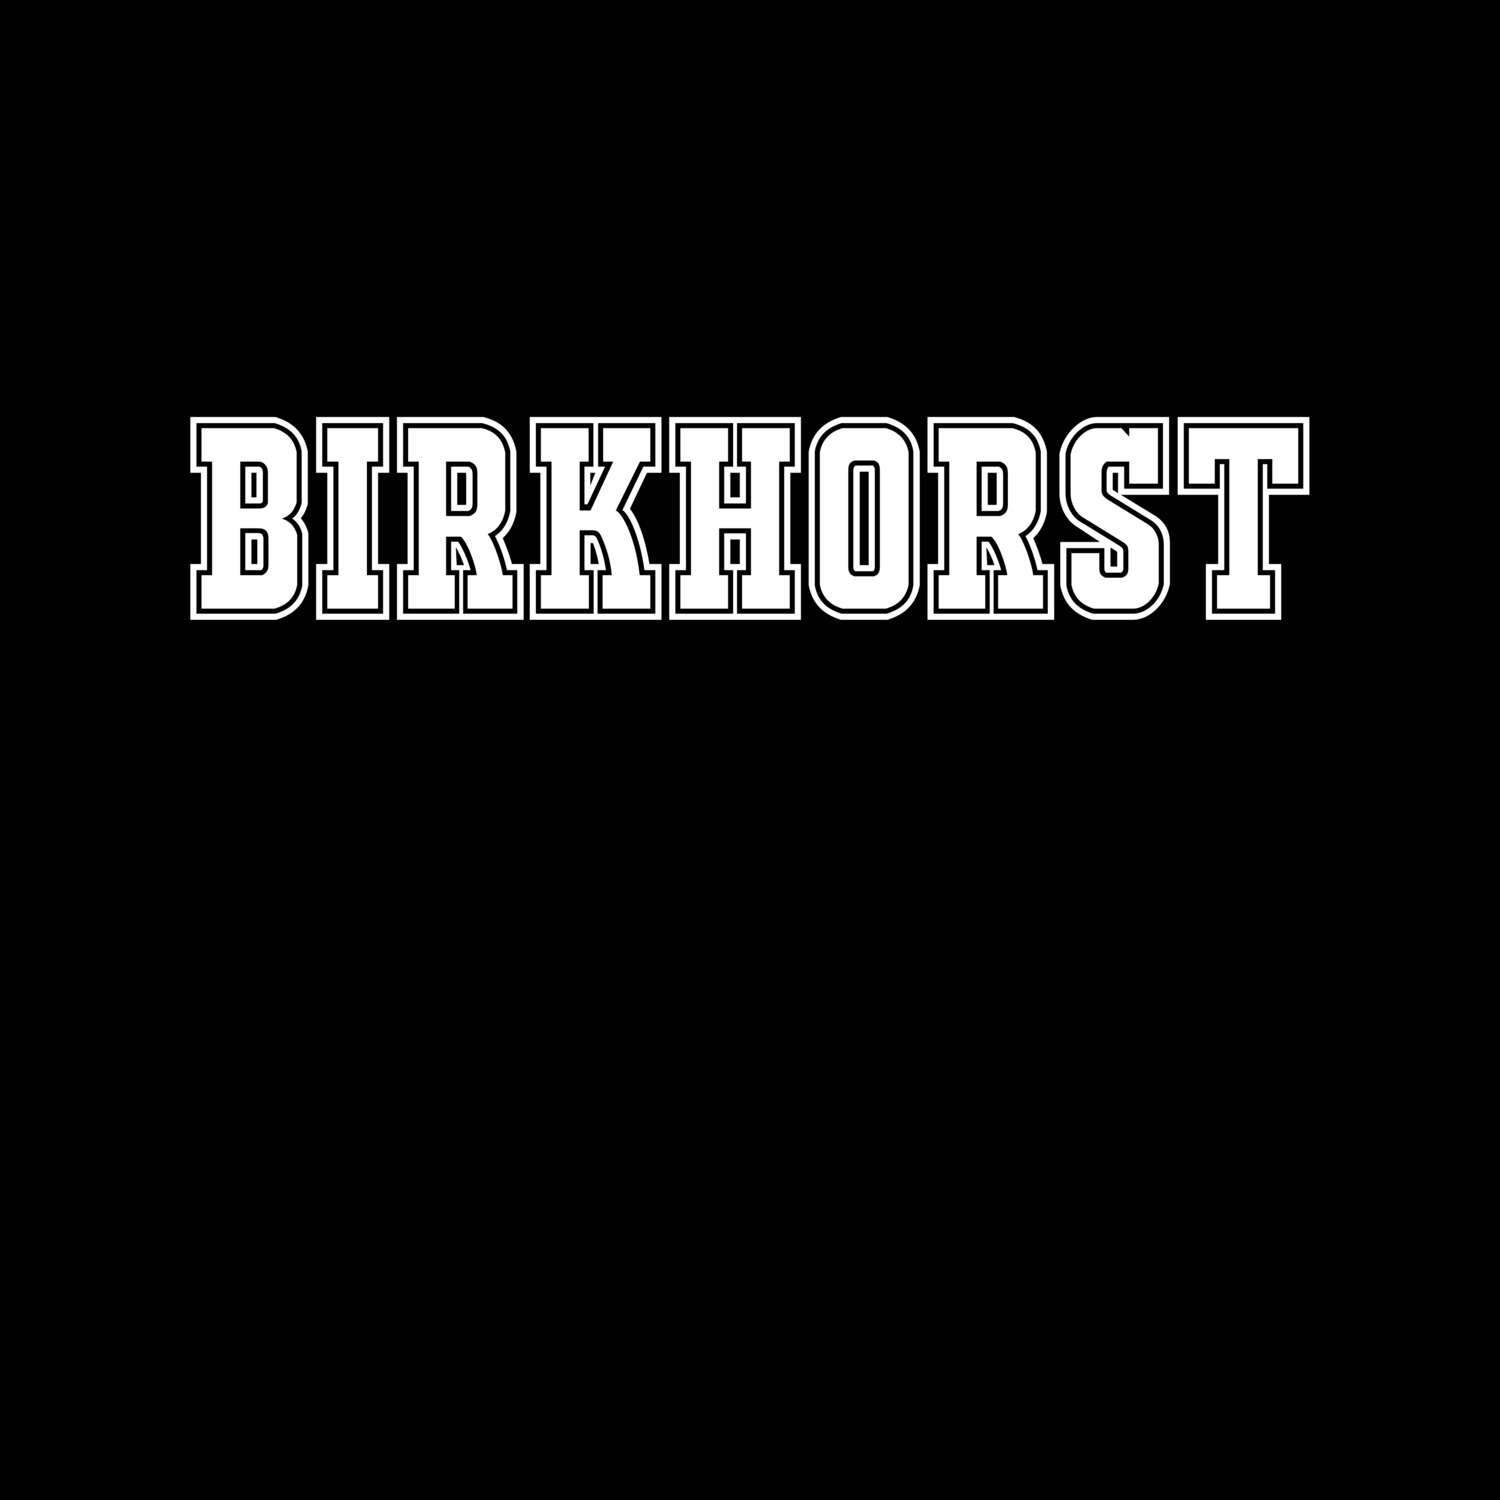 Birkhorst T-Shirt »Classic«